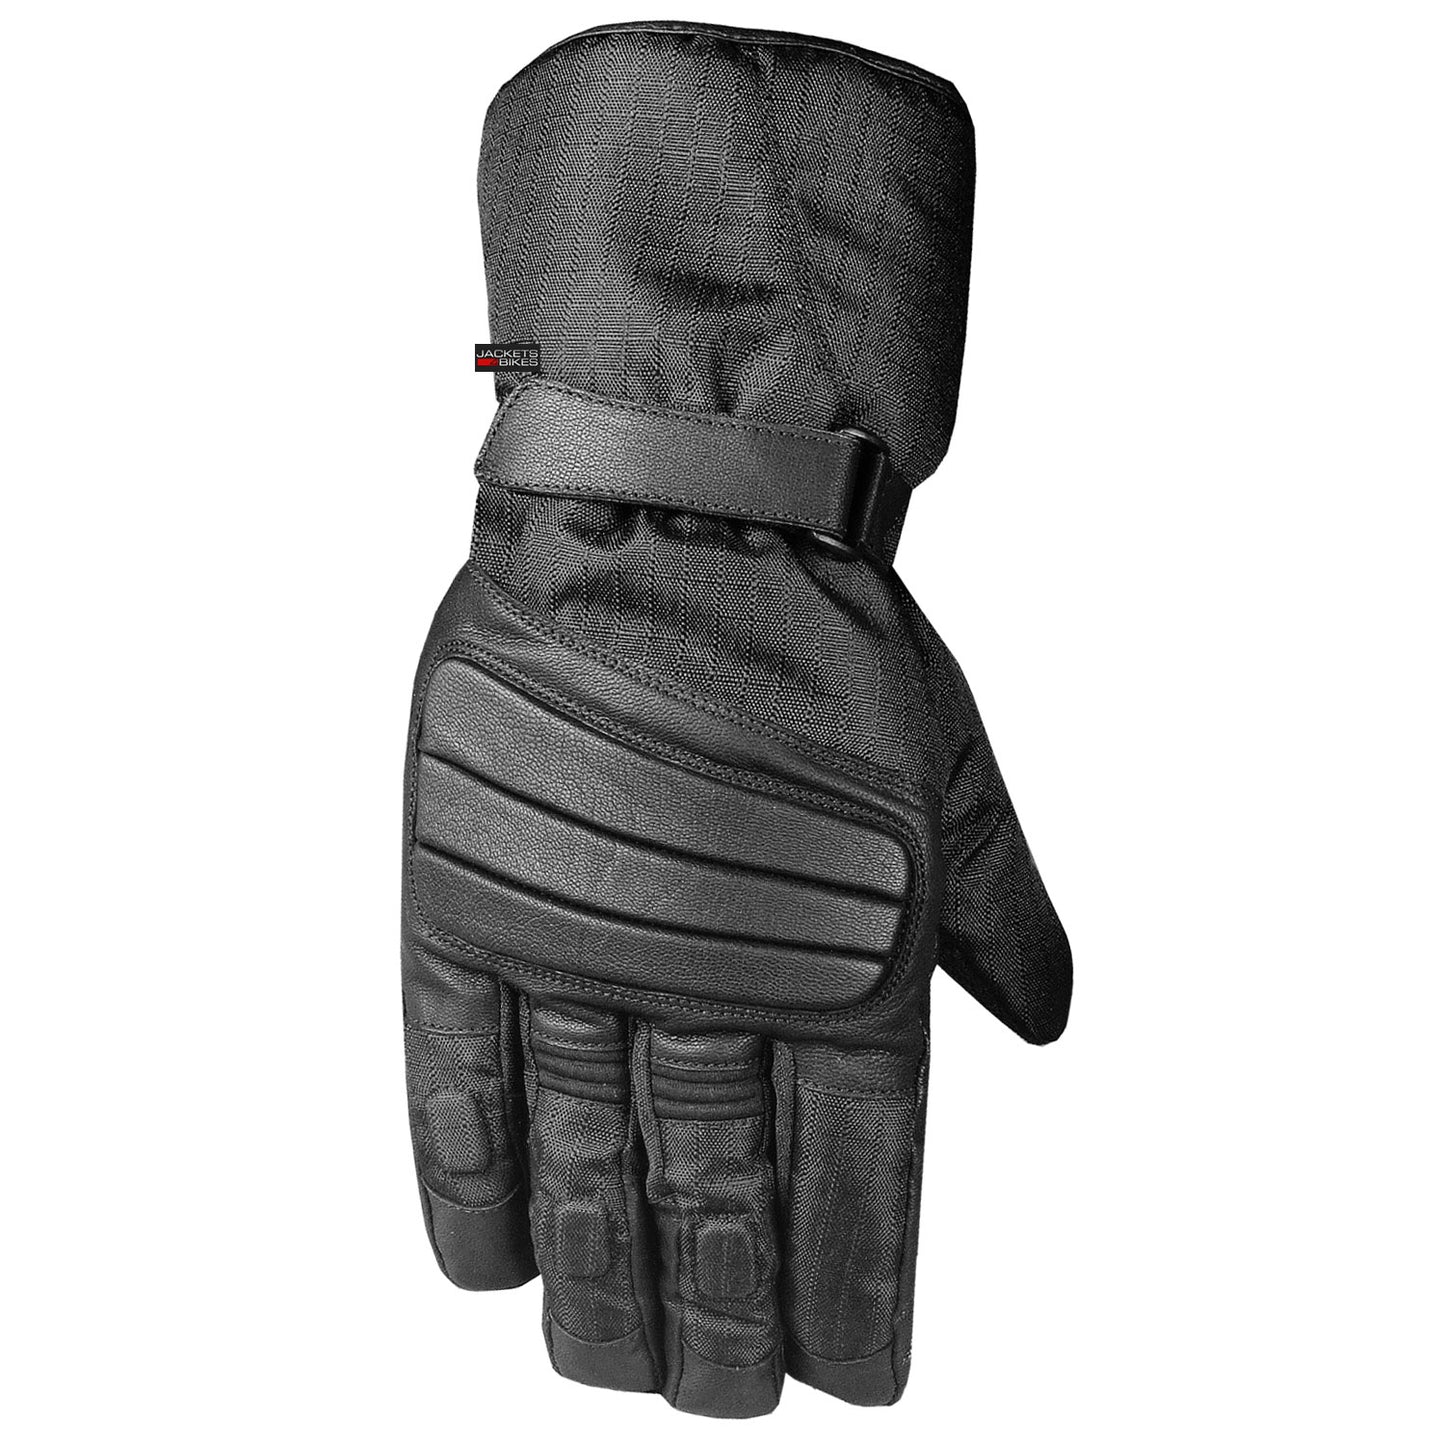 Men's Winter Ski Snowmobile Motorcycle Leather Thermal Waterproof Gloves